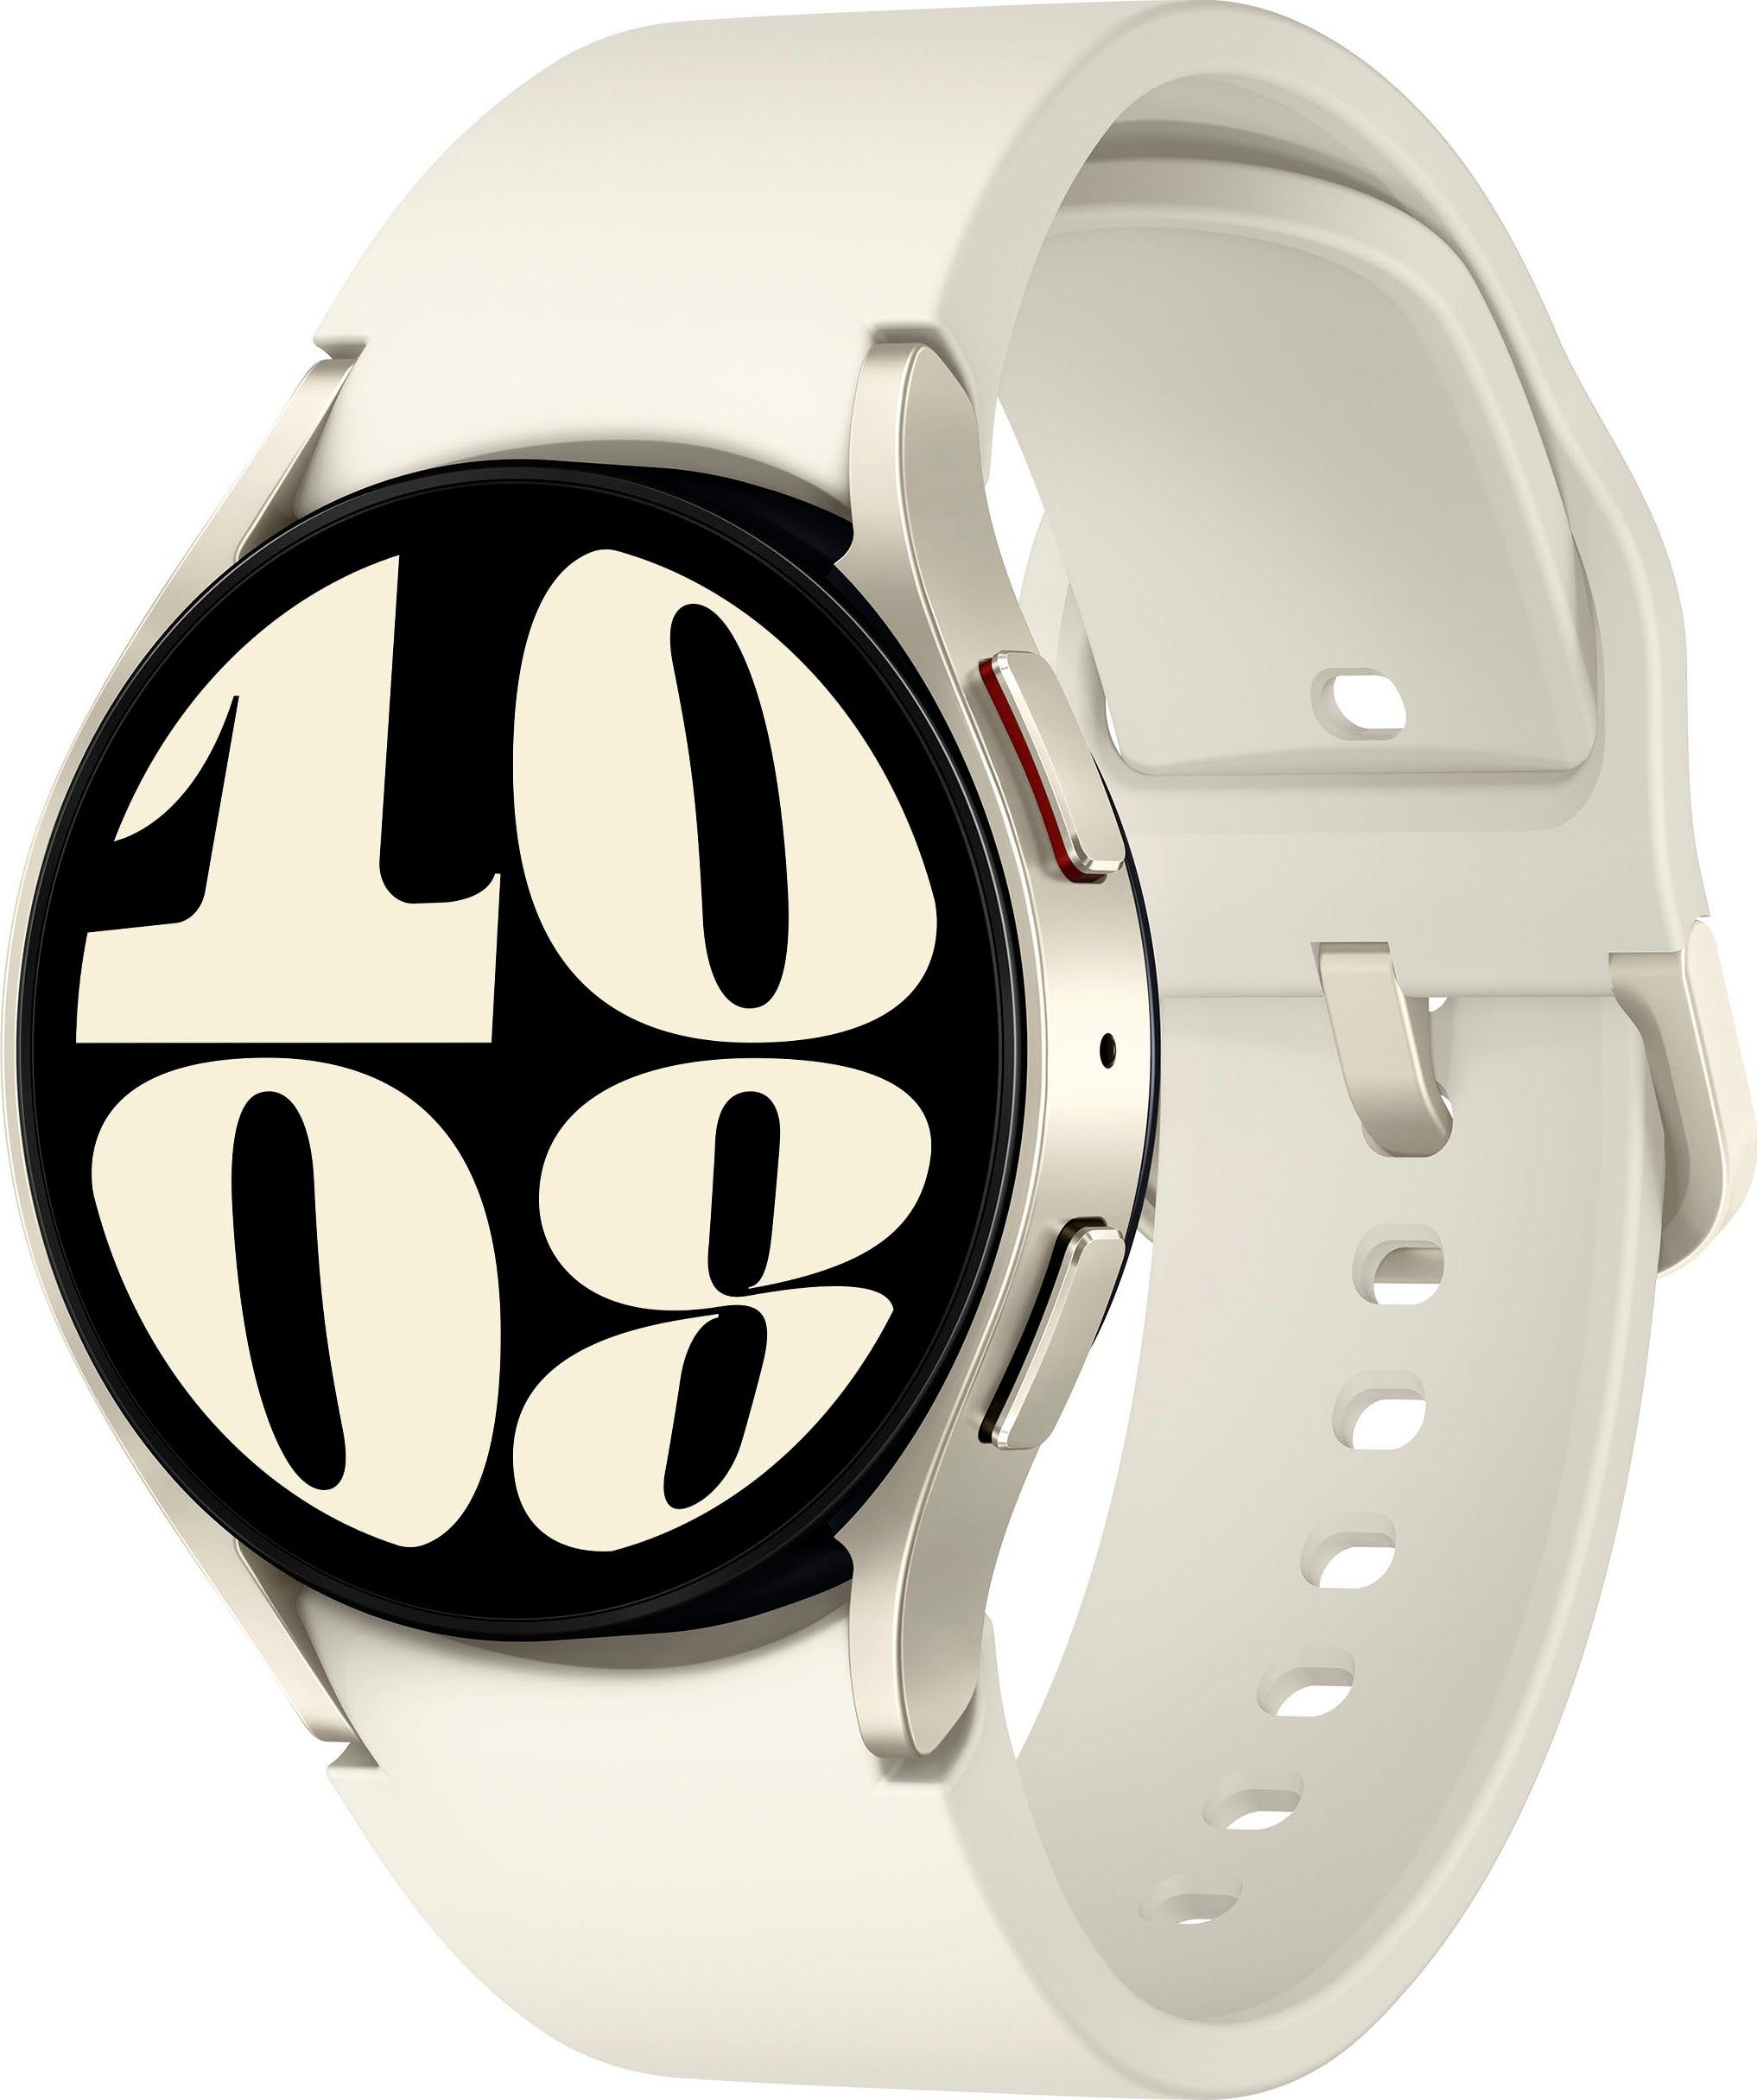 OS gold gold cm/1,3 Samsung by Smartwatch Zoll, Wear Galaxy 40mm | 6 (3,33 Samsung) Watch